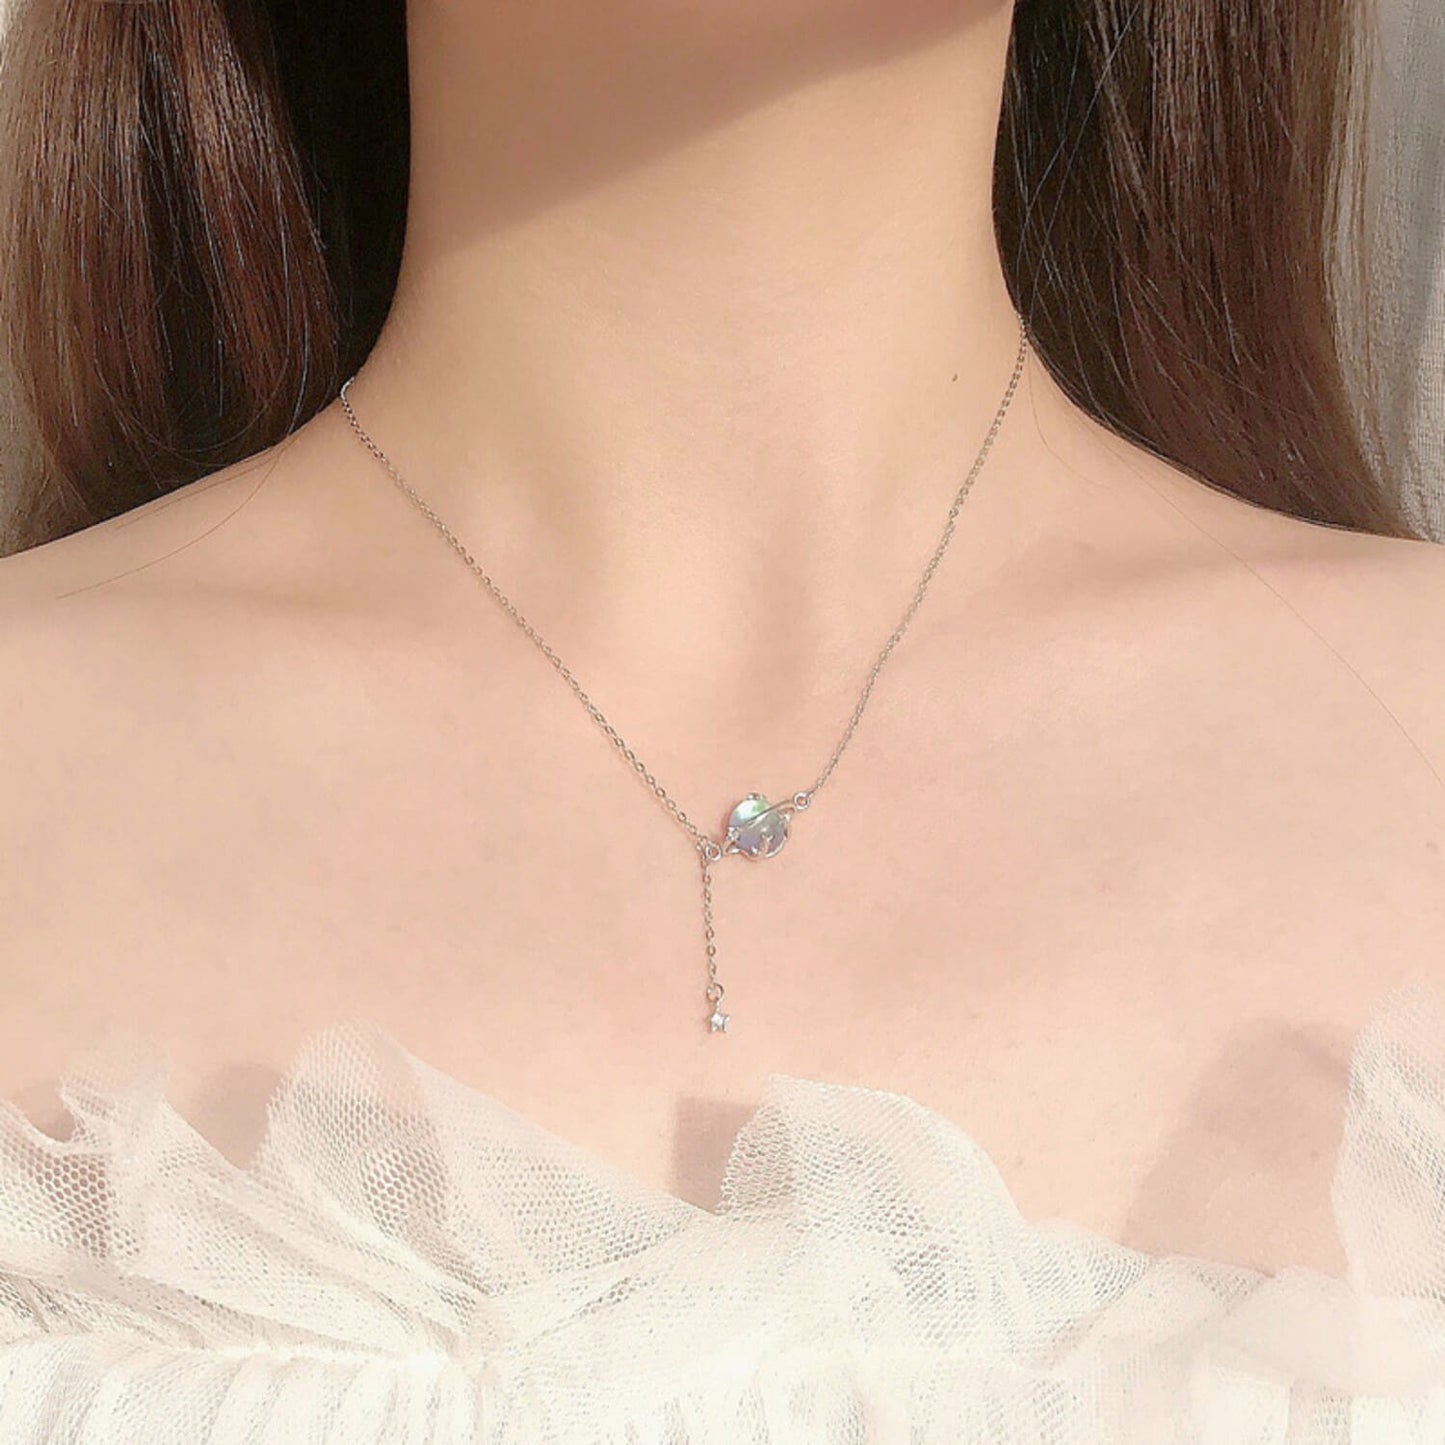 universe star pendant necklace s925